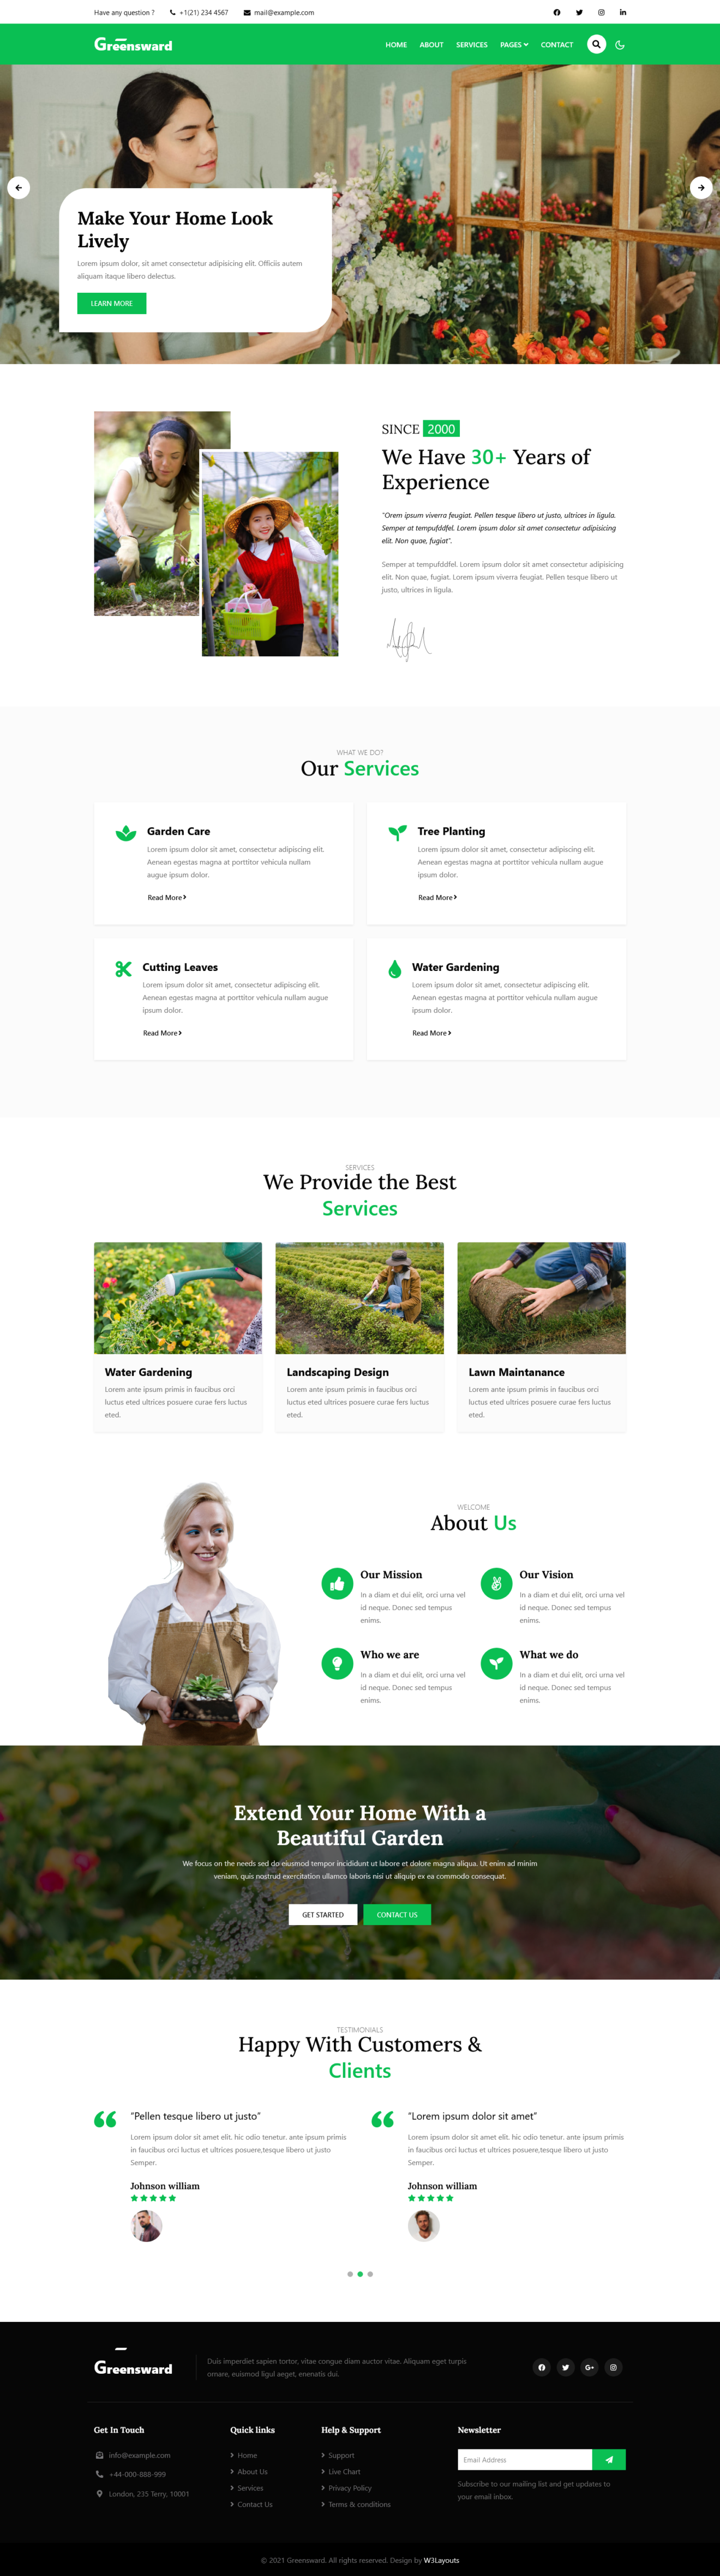 greensward wordpress theme - home page